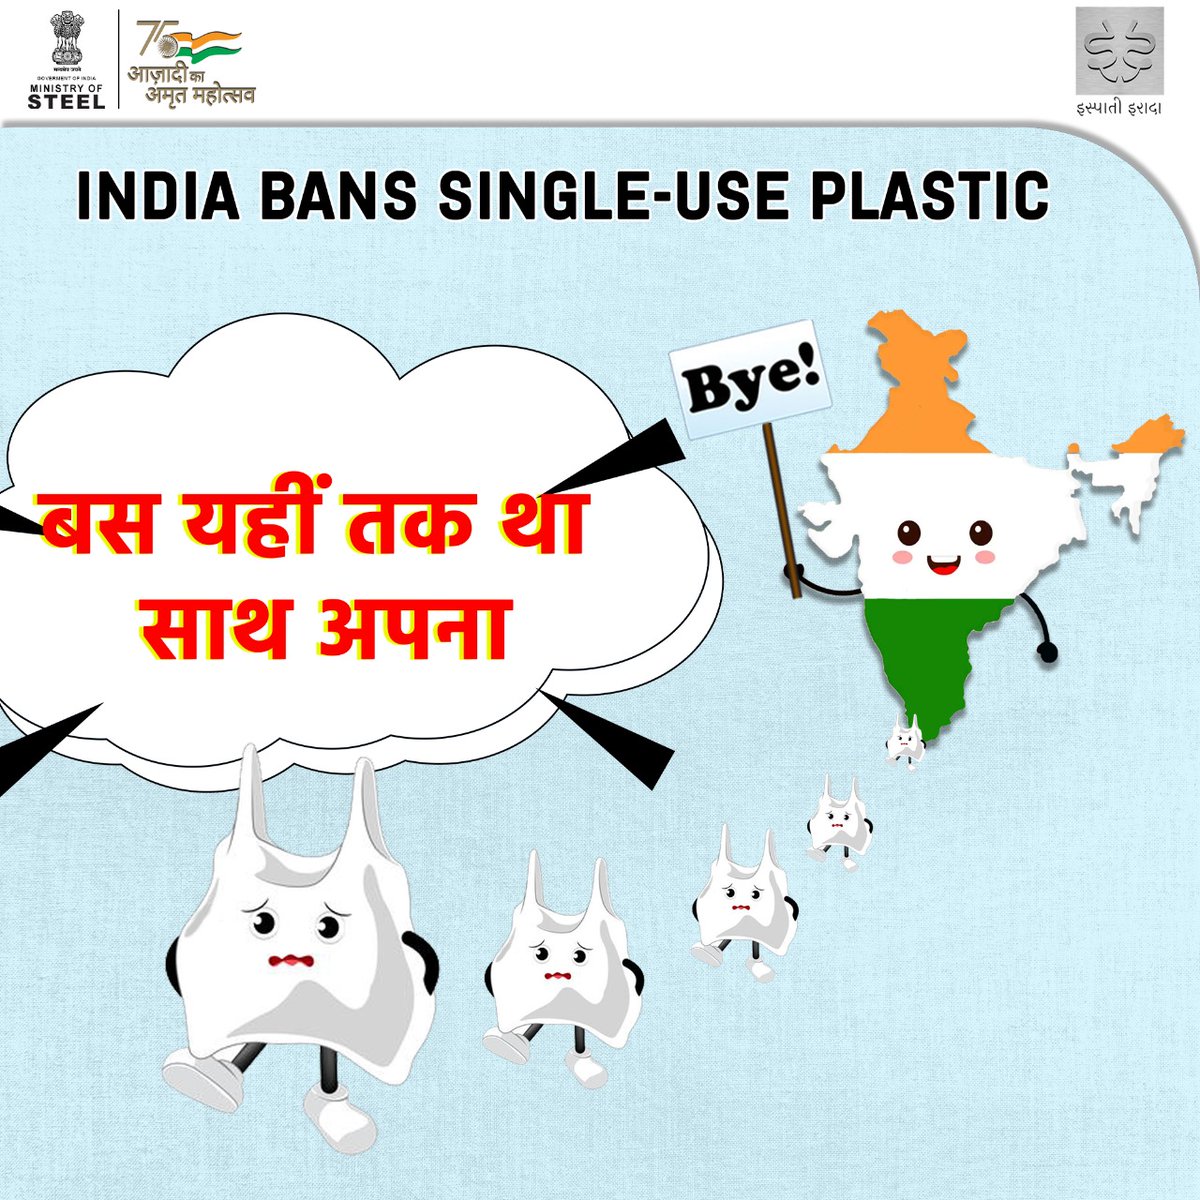 India bans single-use plastic

Plastic be like: 
Bas yahin tak tha sath apna 

#plasticban #PollutionFree #PlasticFreeIndia #singleuseplasticban
#AzadiKaAmritMahotsav